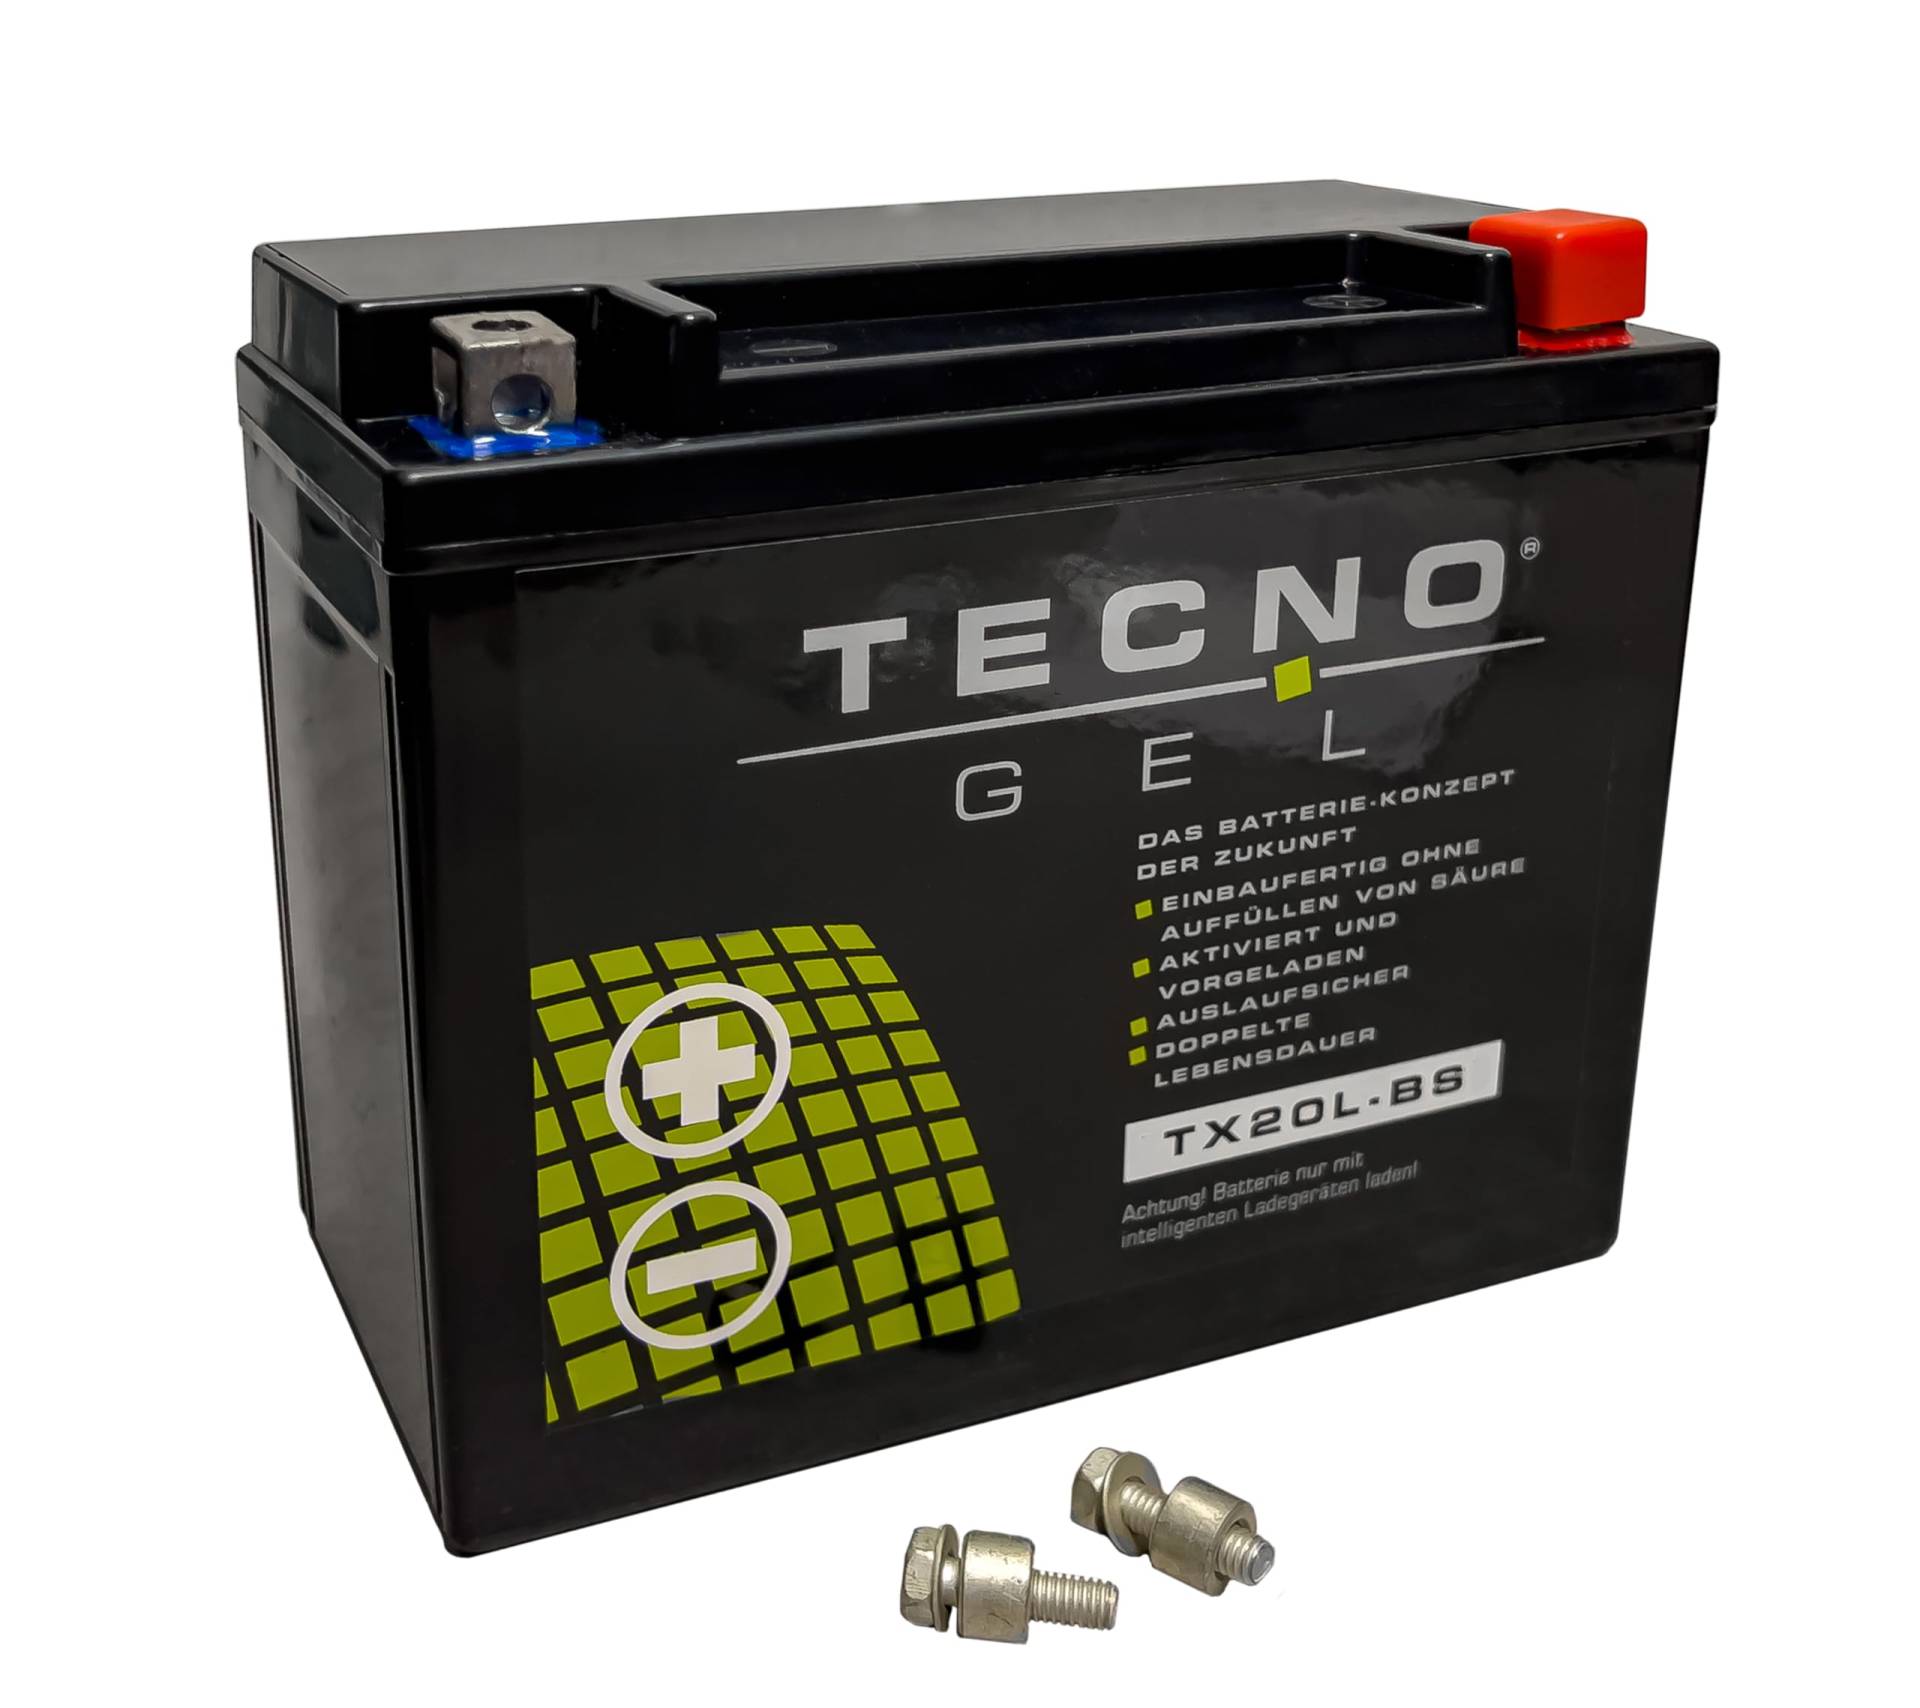 TECNO-GEL Motorrad-Batterie für YTX20L-BS für KYMCO MXU u. UXV 450/500/700 2005-2018, 12V Gel-Batterie 20Ah (DIN 82000), 175x87x155 mm von Wirth-Federn